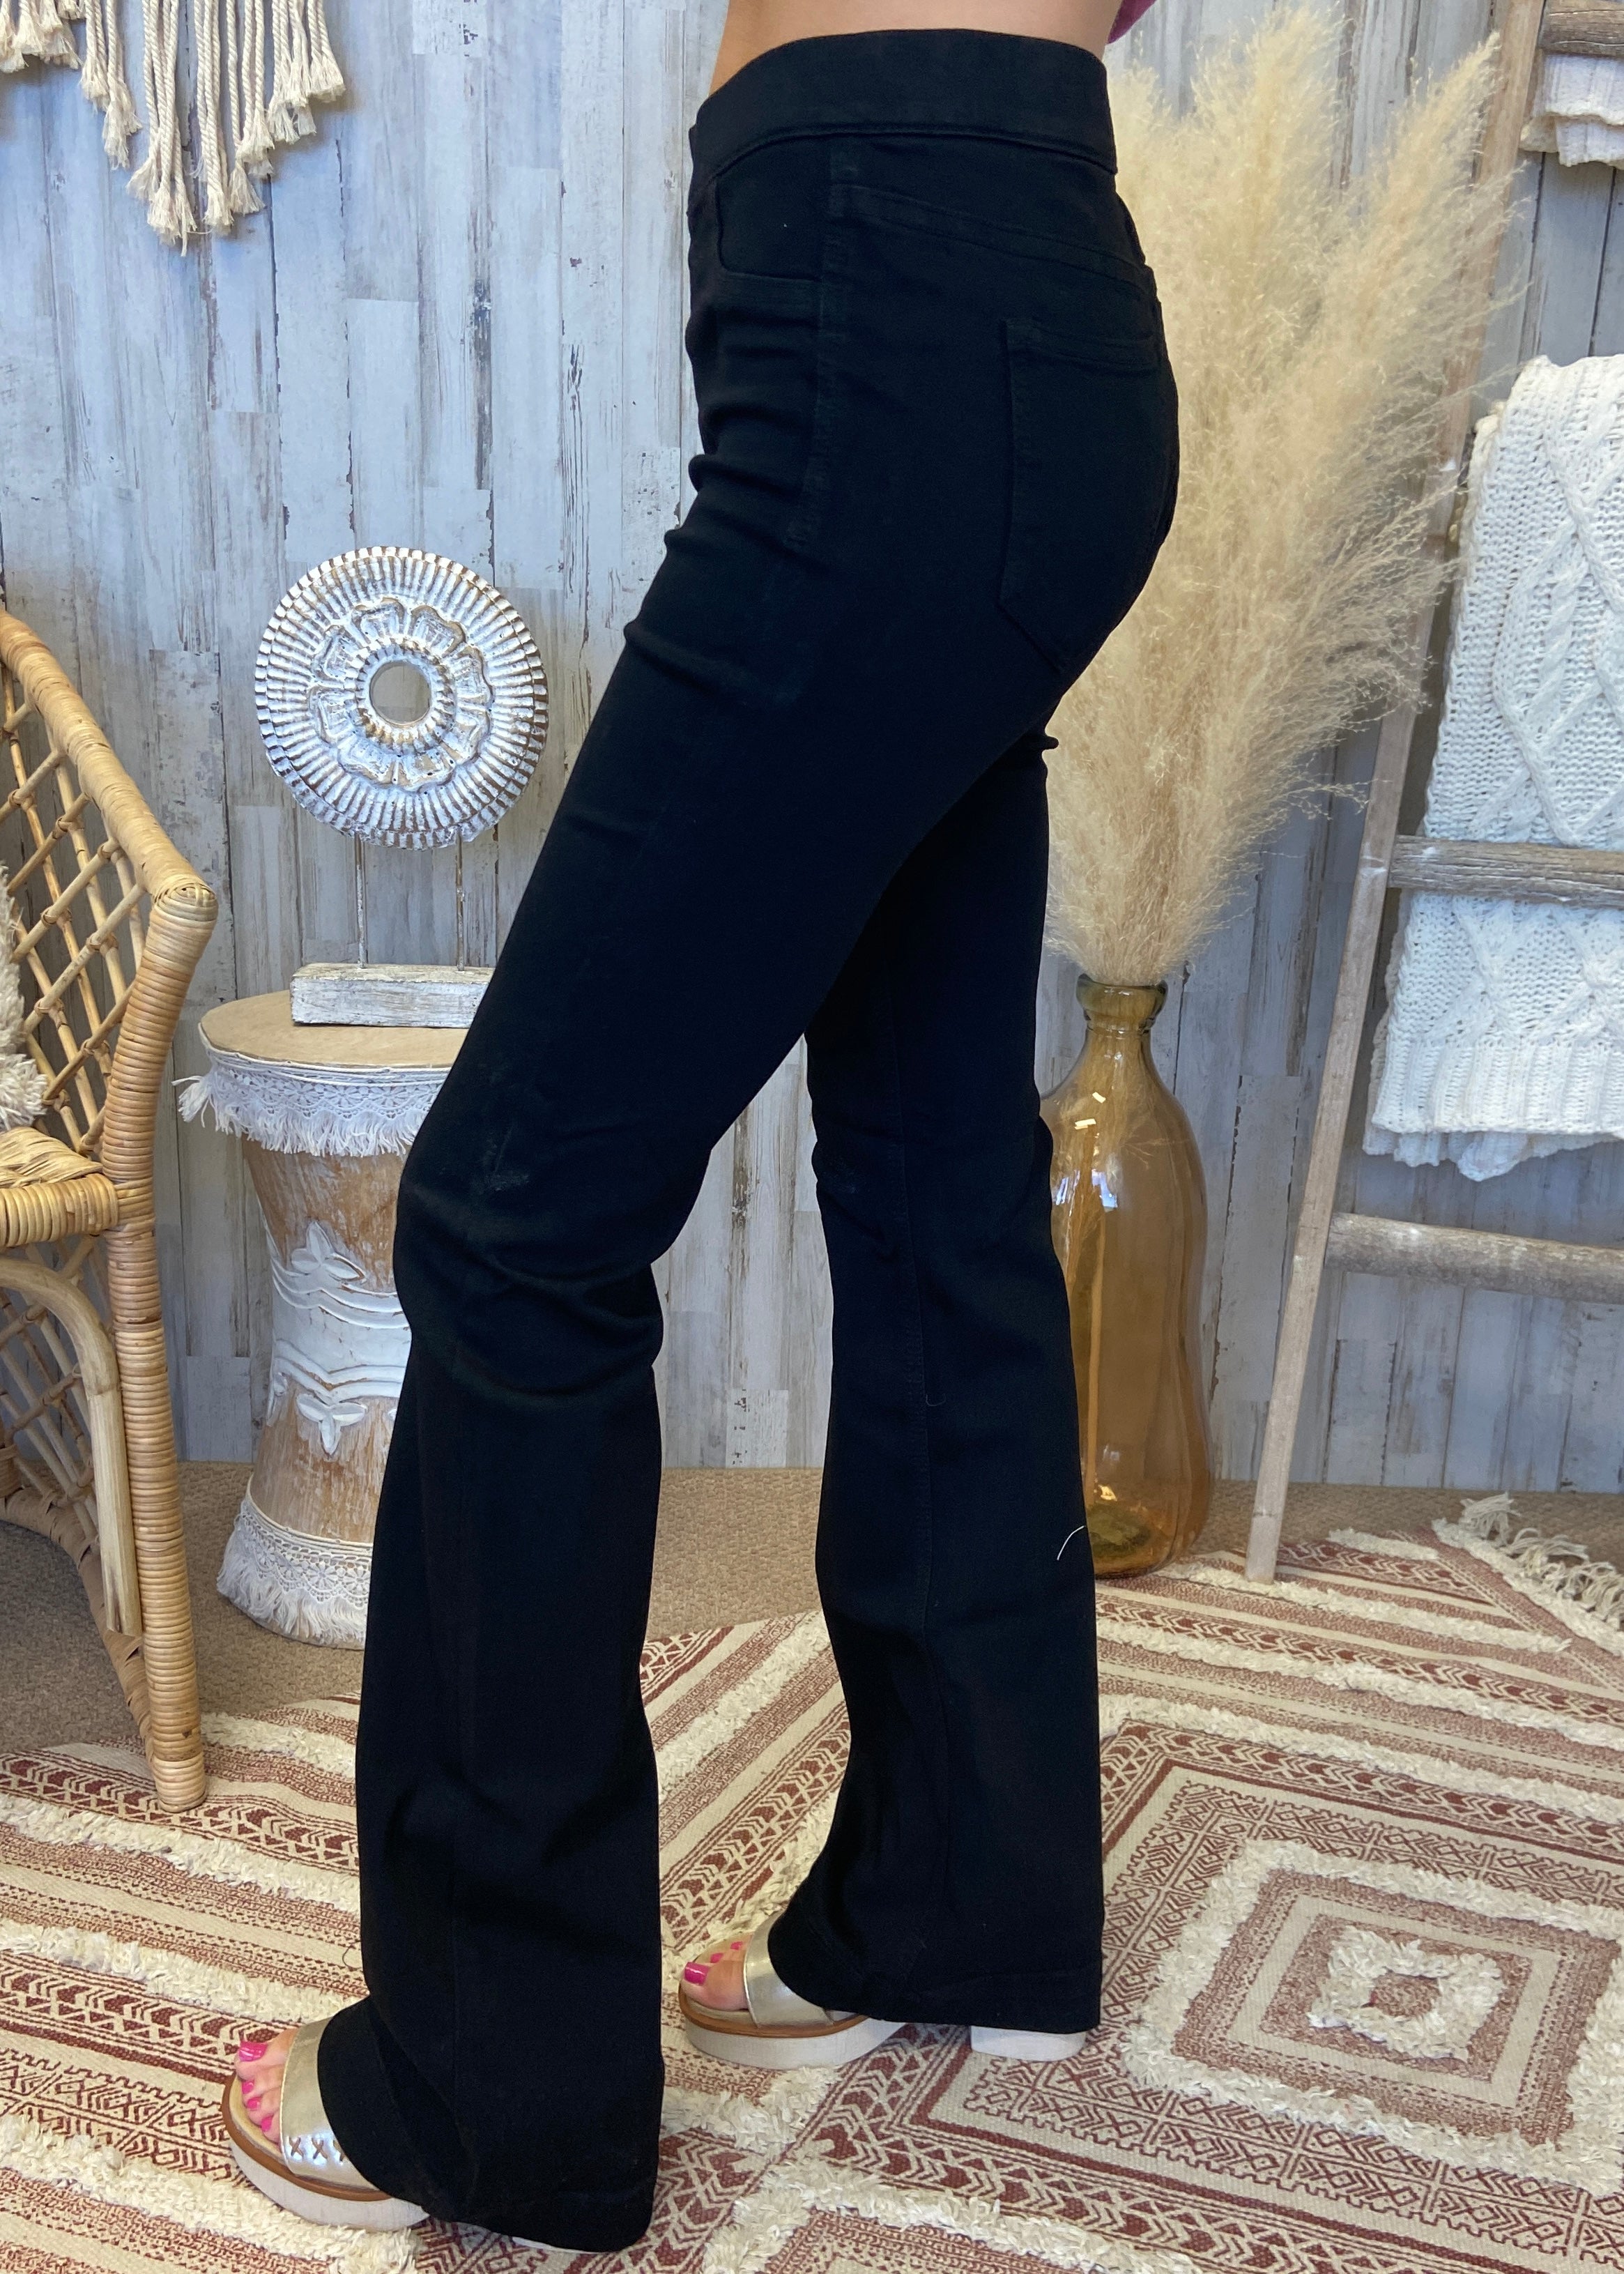 Black jeans / Bell Bottom pants / trousers, Women's Fashion